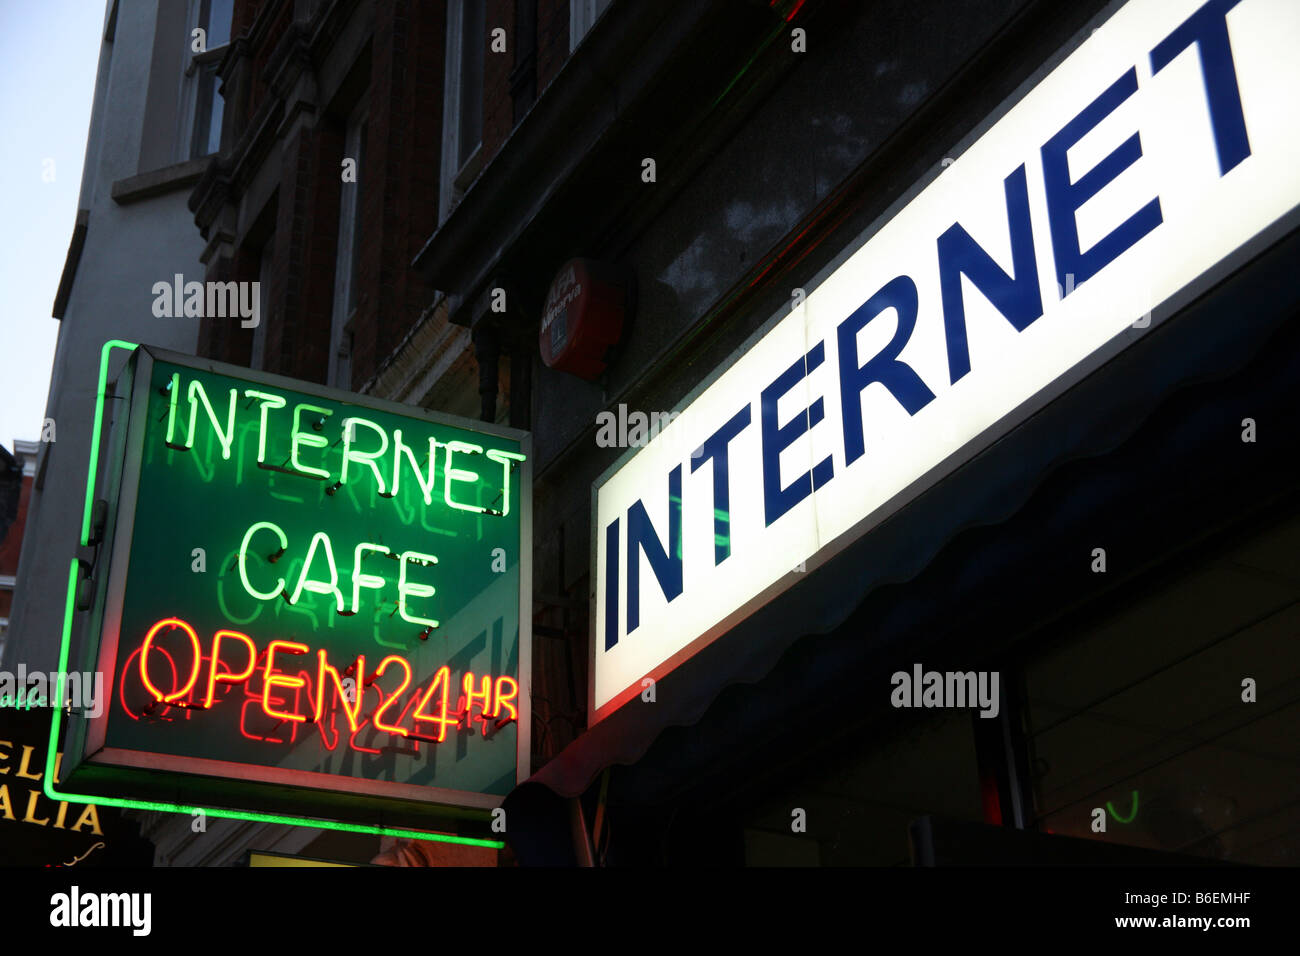 Internet cafe sign, London Stock Photo